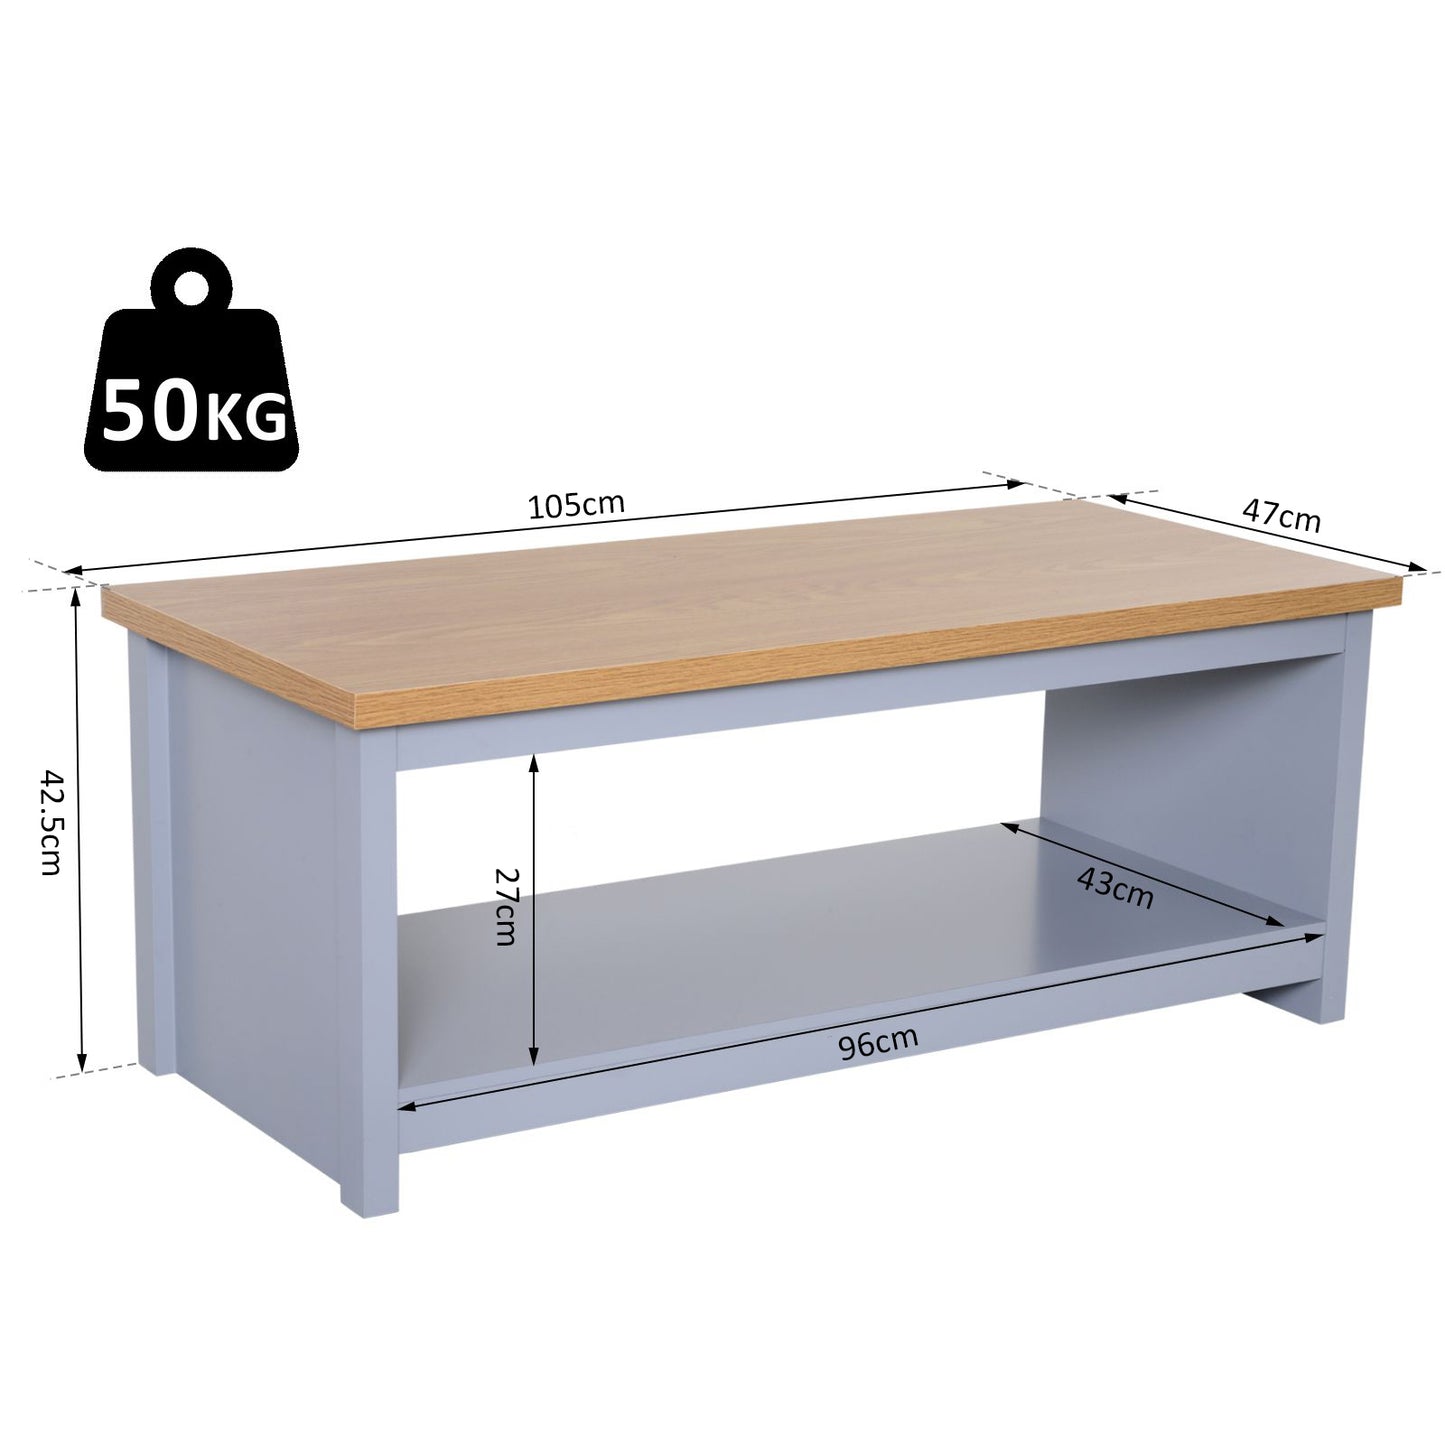 HOMCOM Coffee Table w/Open Display Wood Effect Tabletop Retro Rustic Style Chic Storage Grey